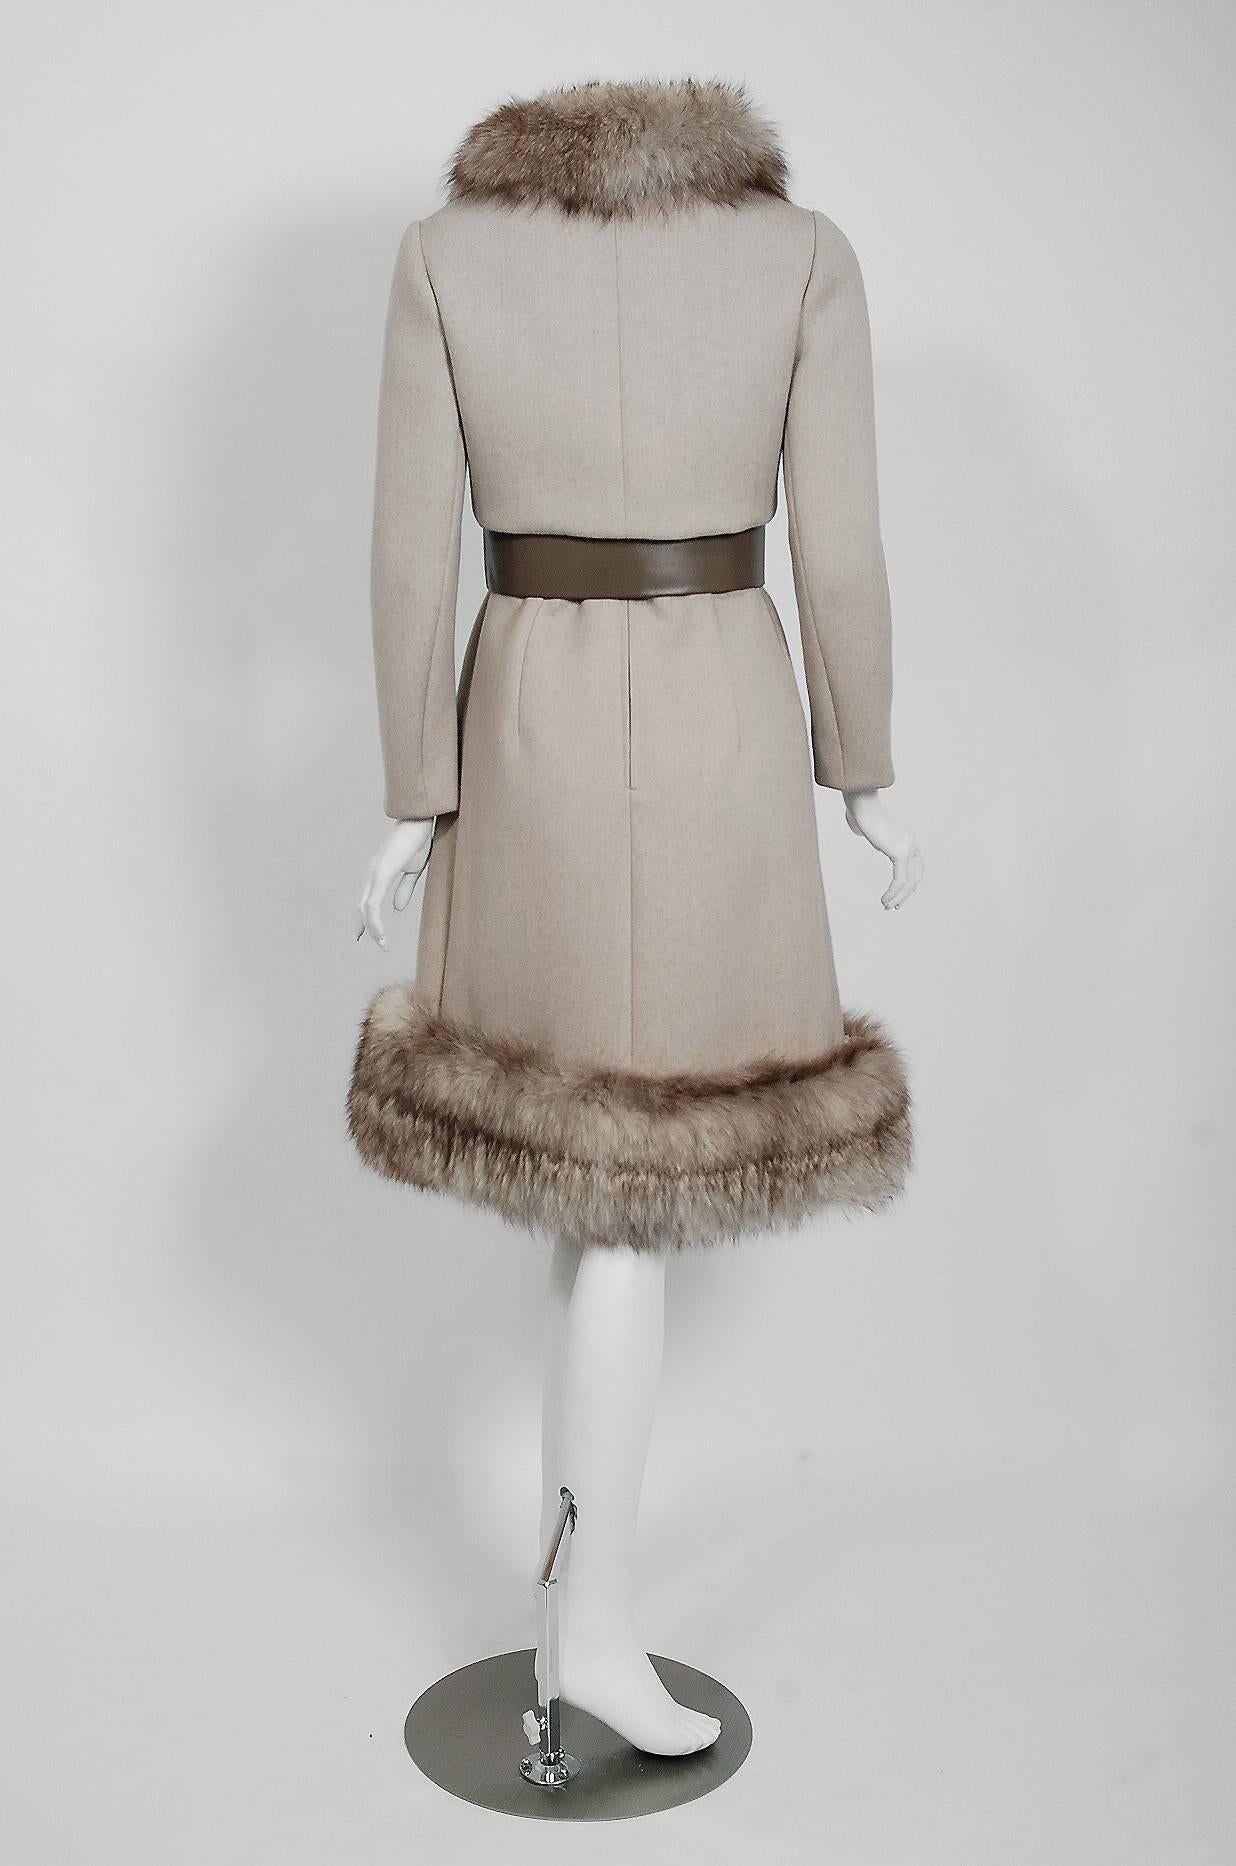 1962 Norman Norell Oatmeal Wool & Genuine Fox-Fur Belted Dress Jacket Ensemble 2